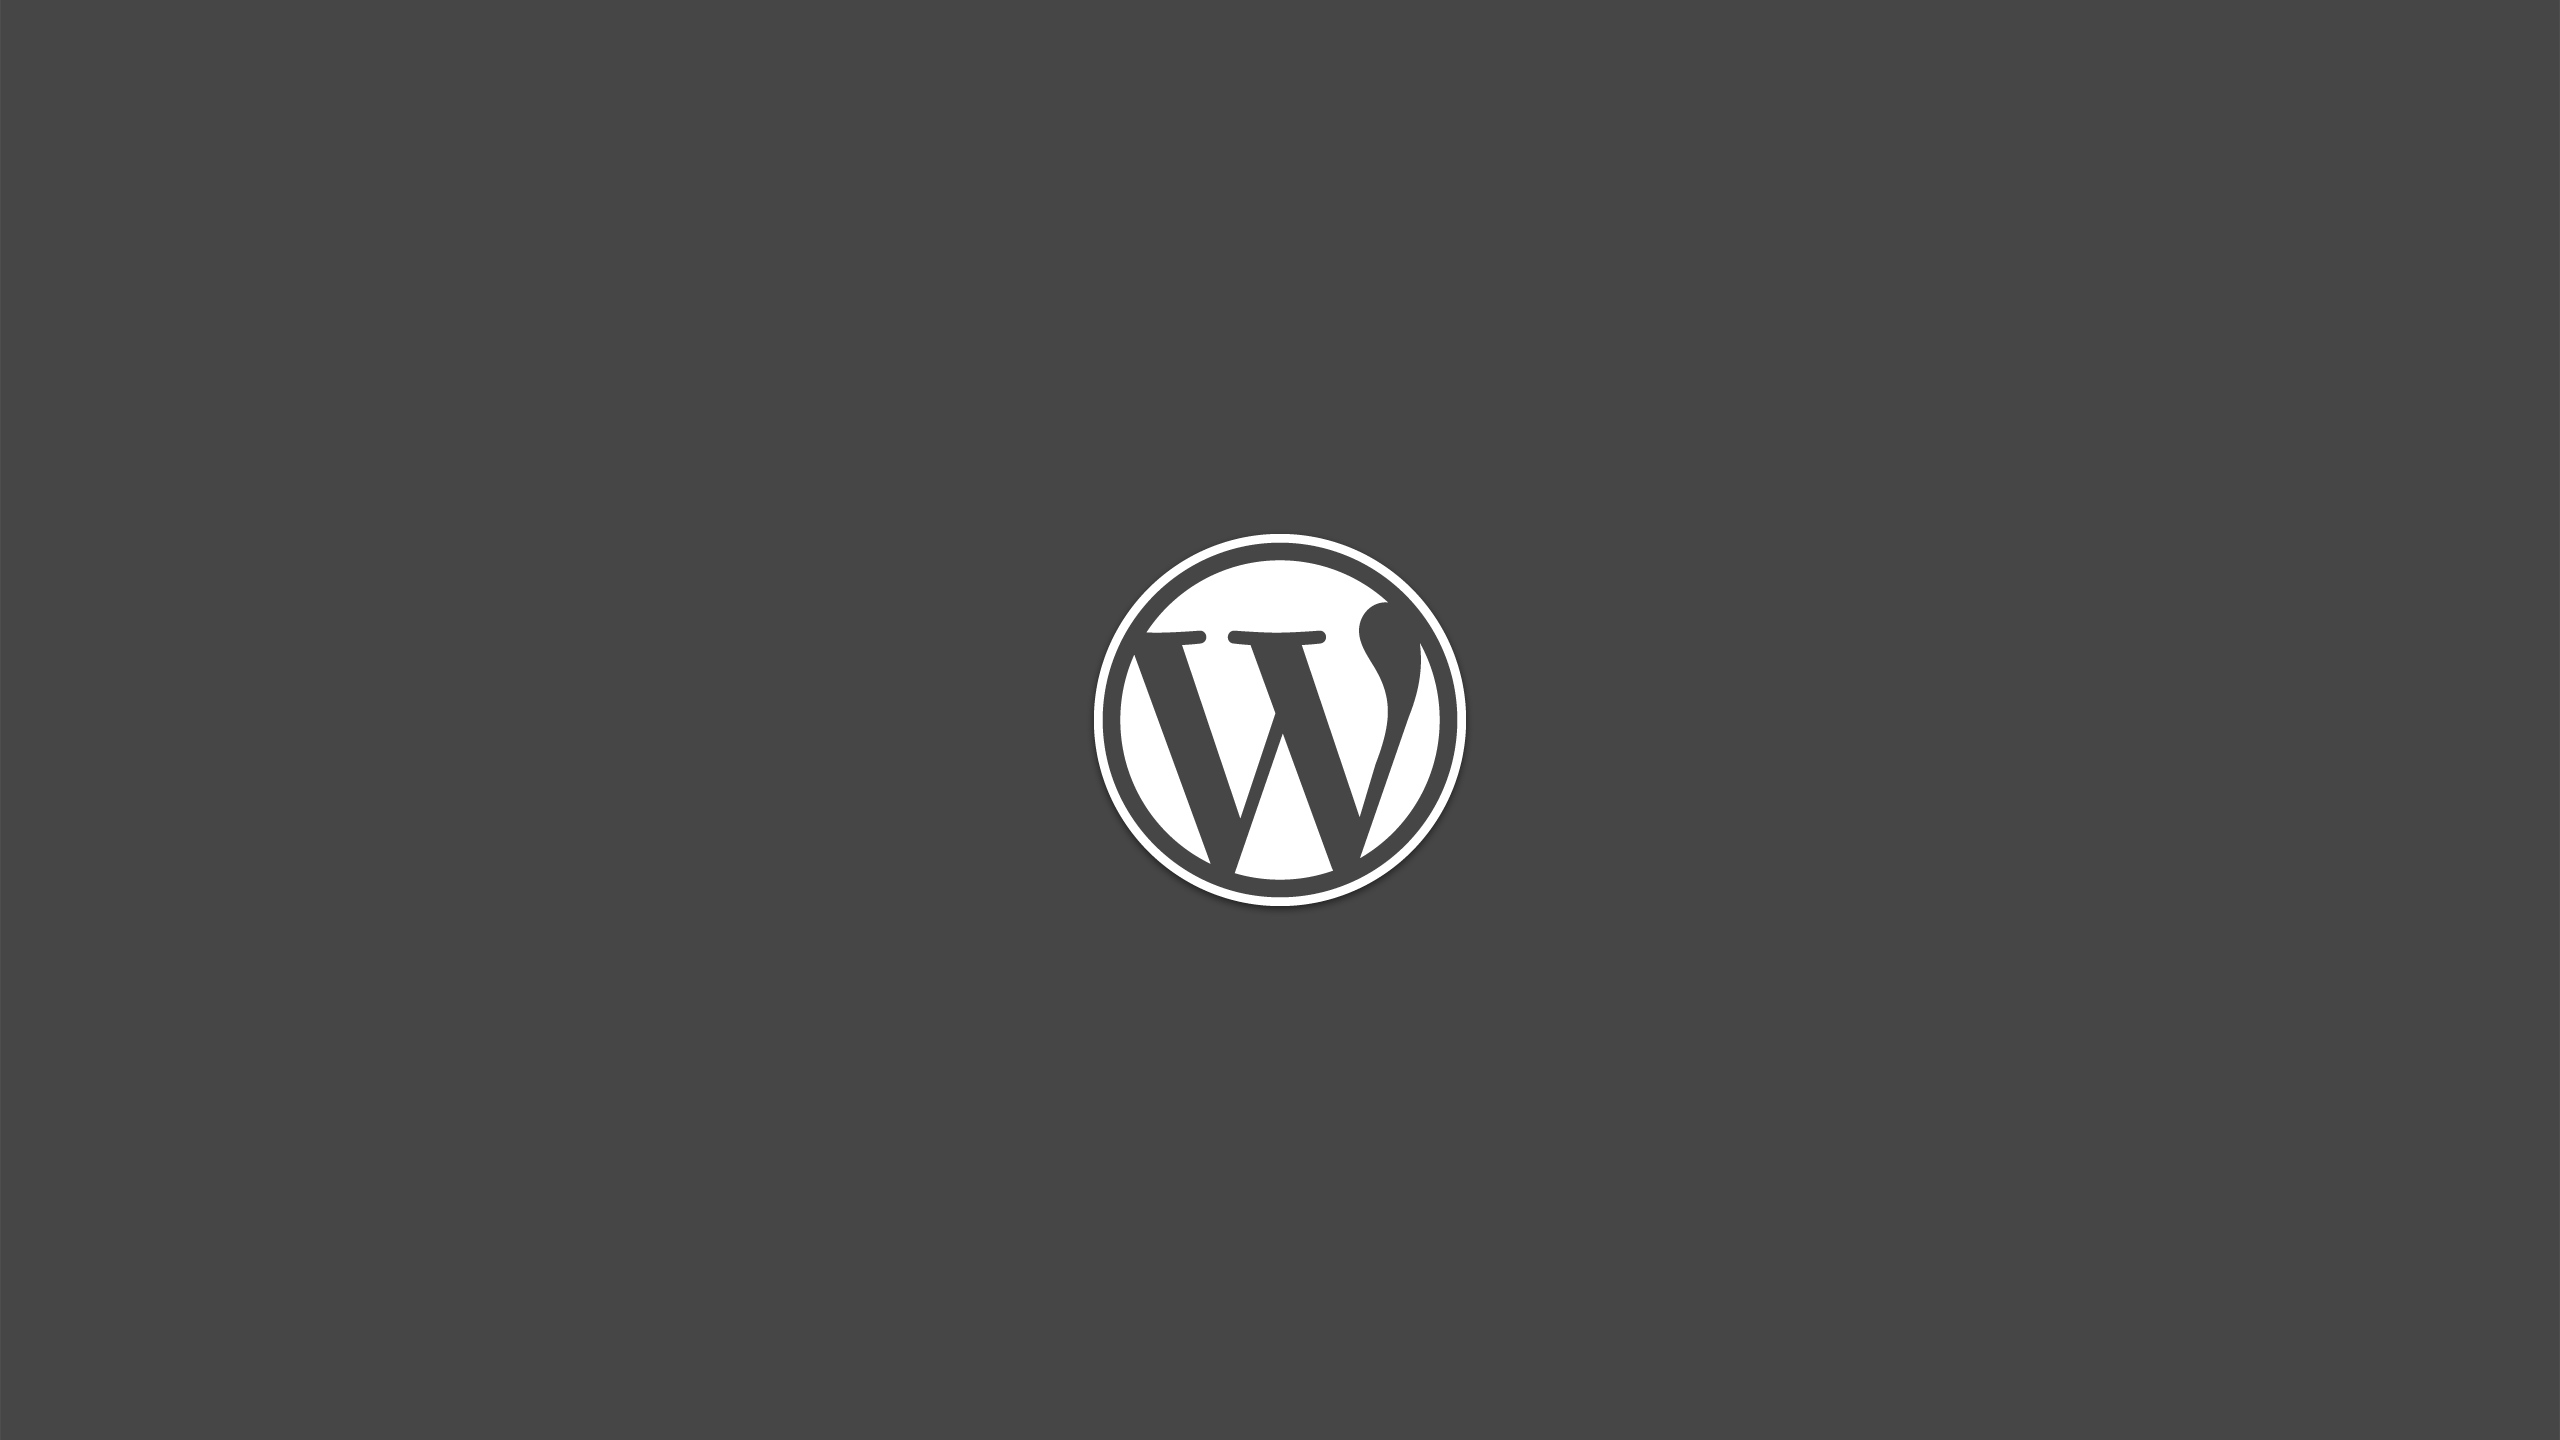 Wordpress Logo Wallpaper Background 62786 2560x1440px